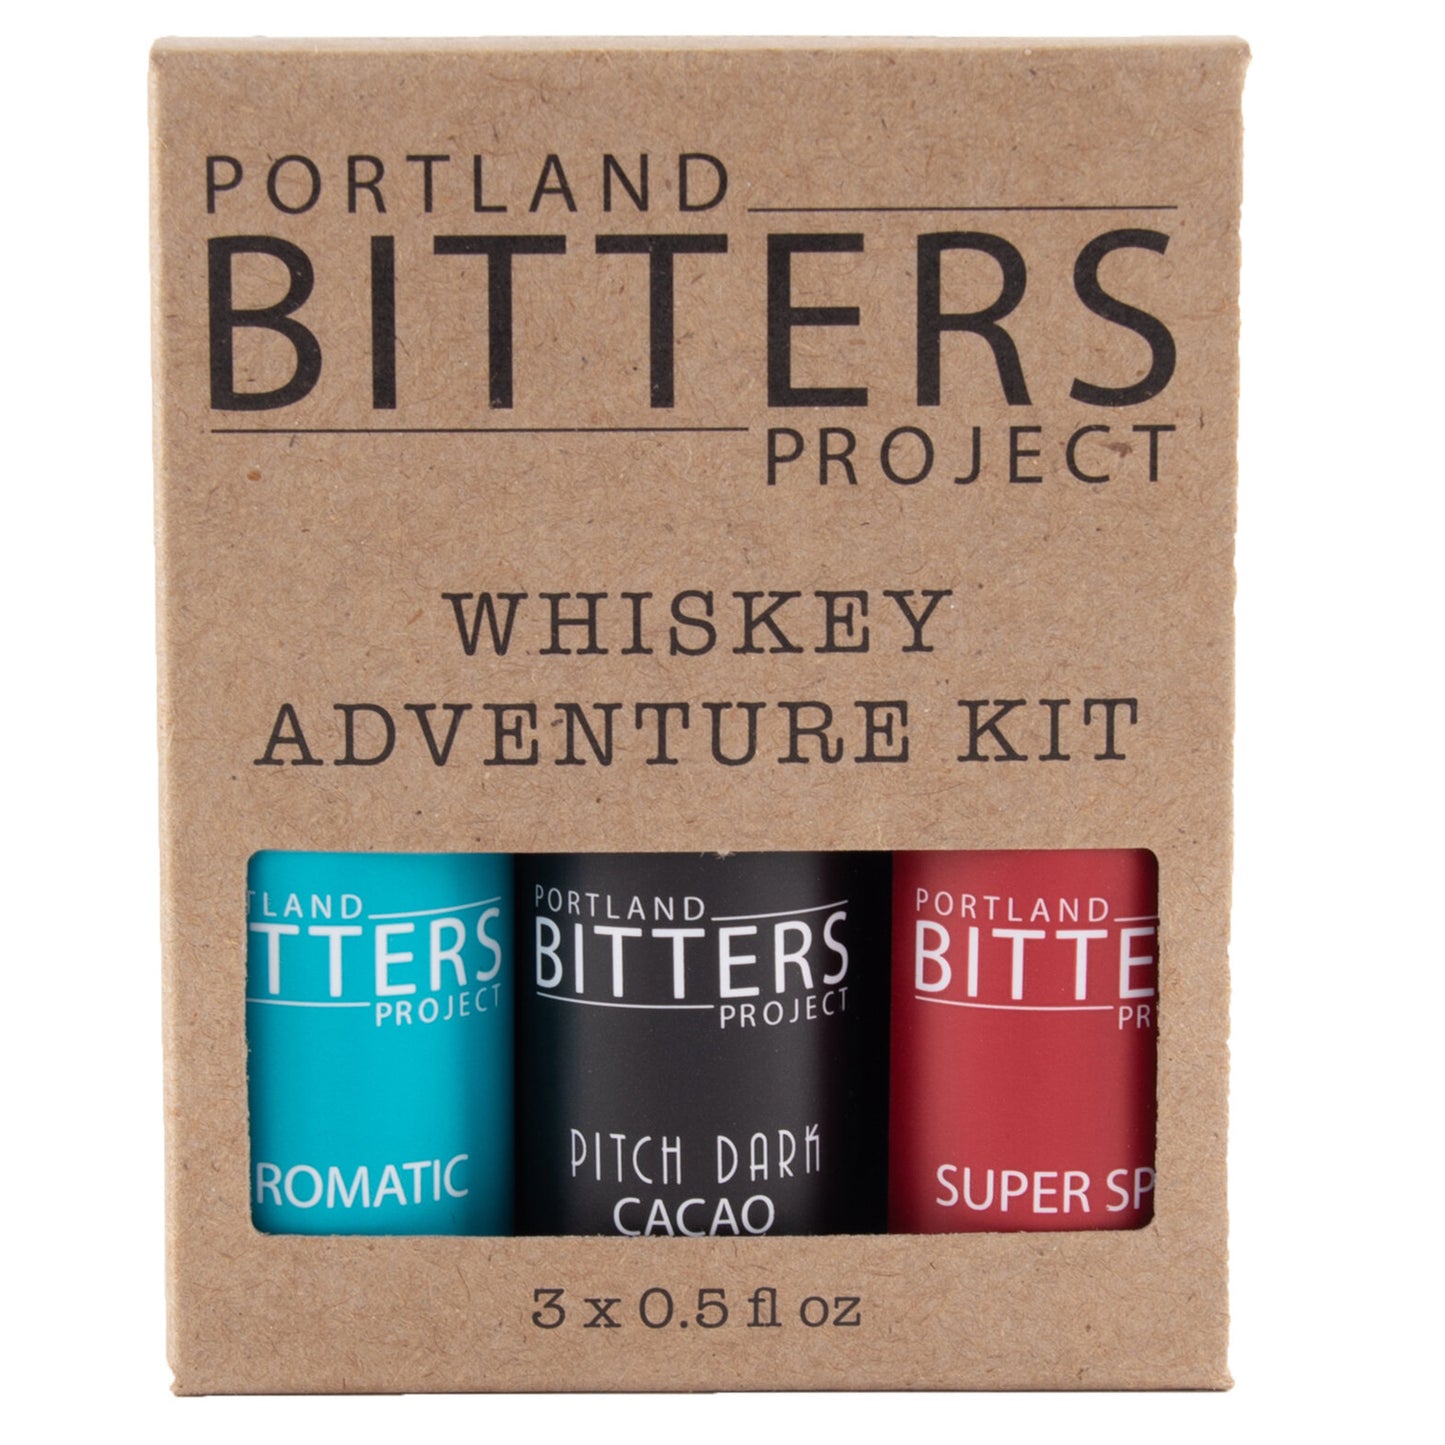 Bitters Adventure Kit